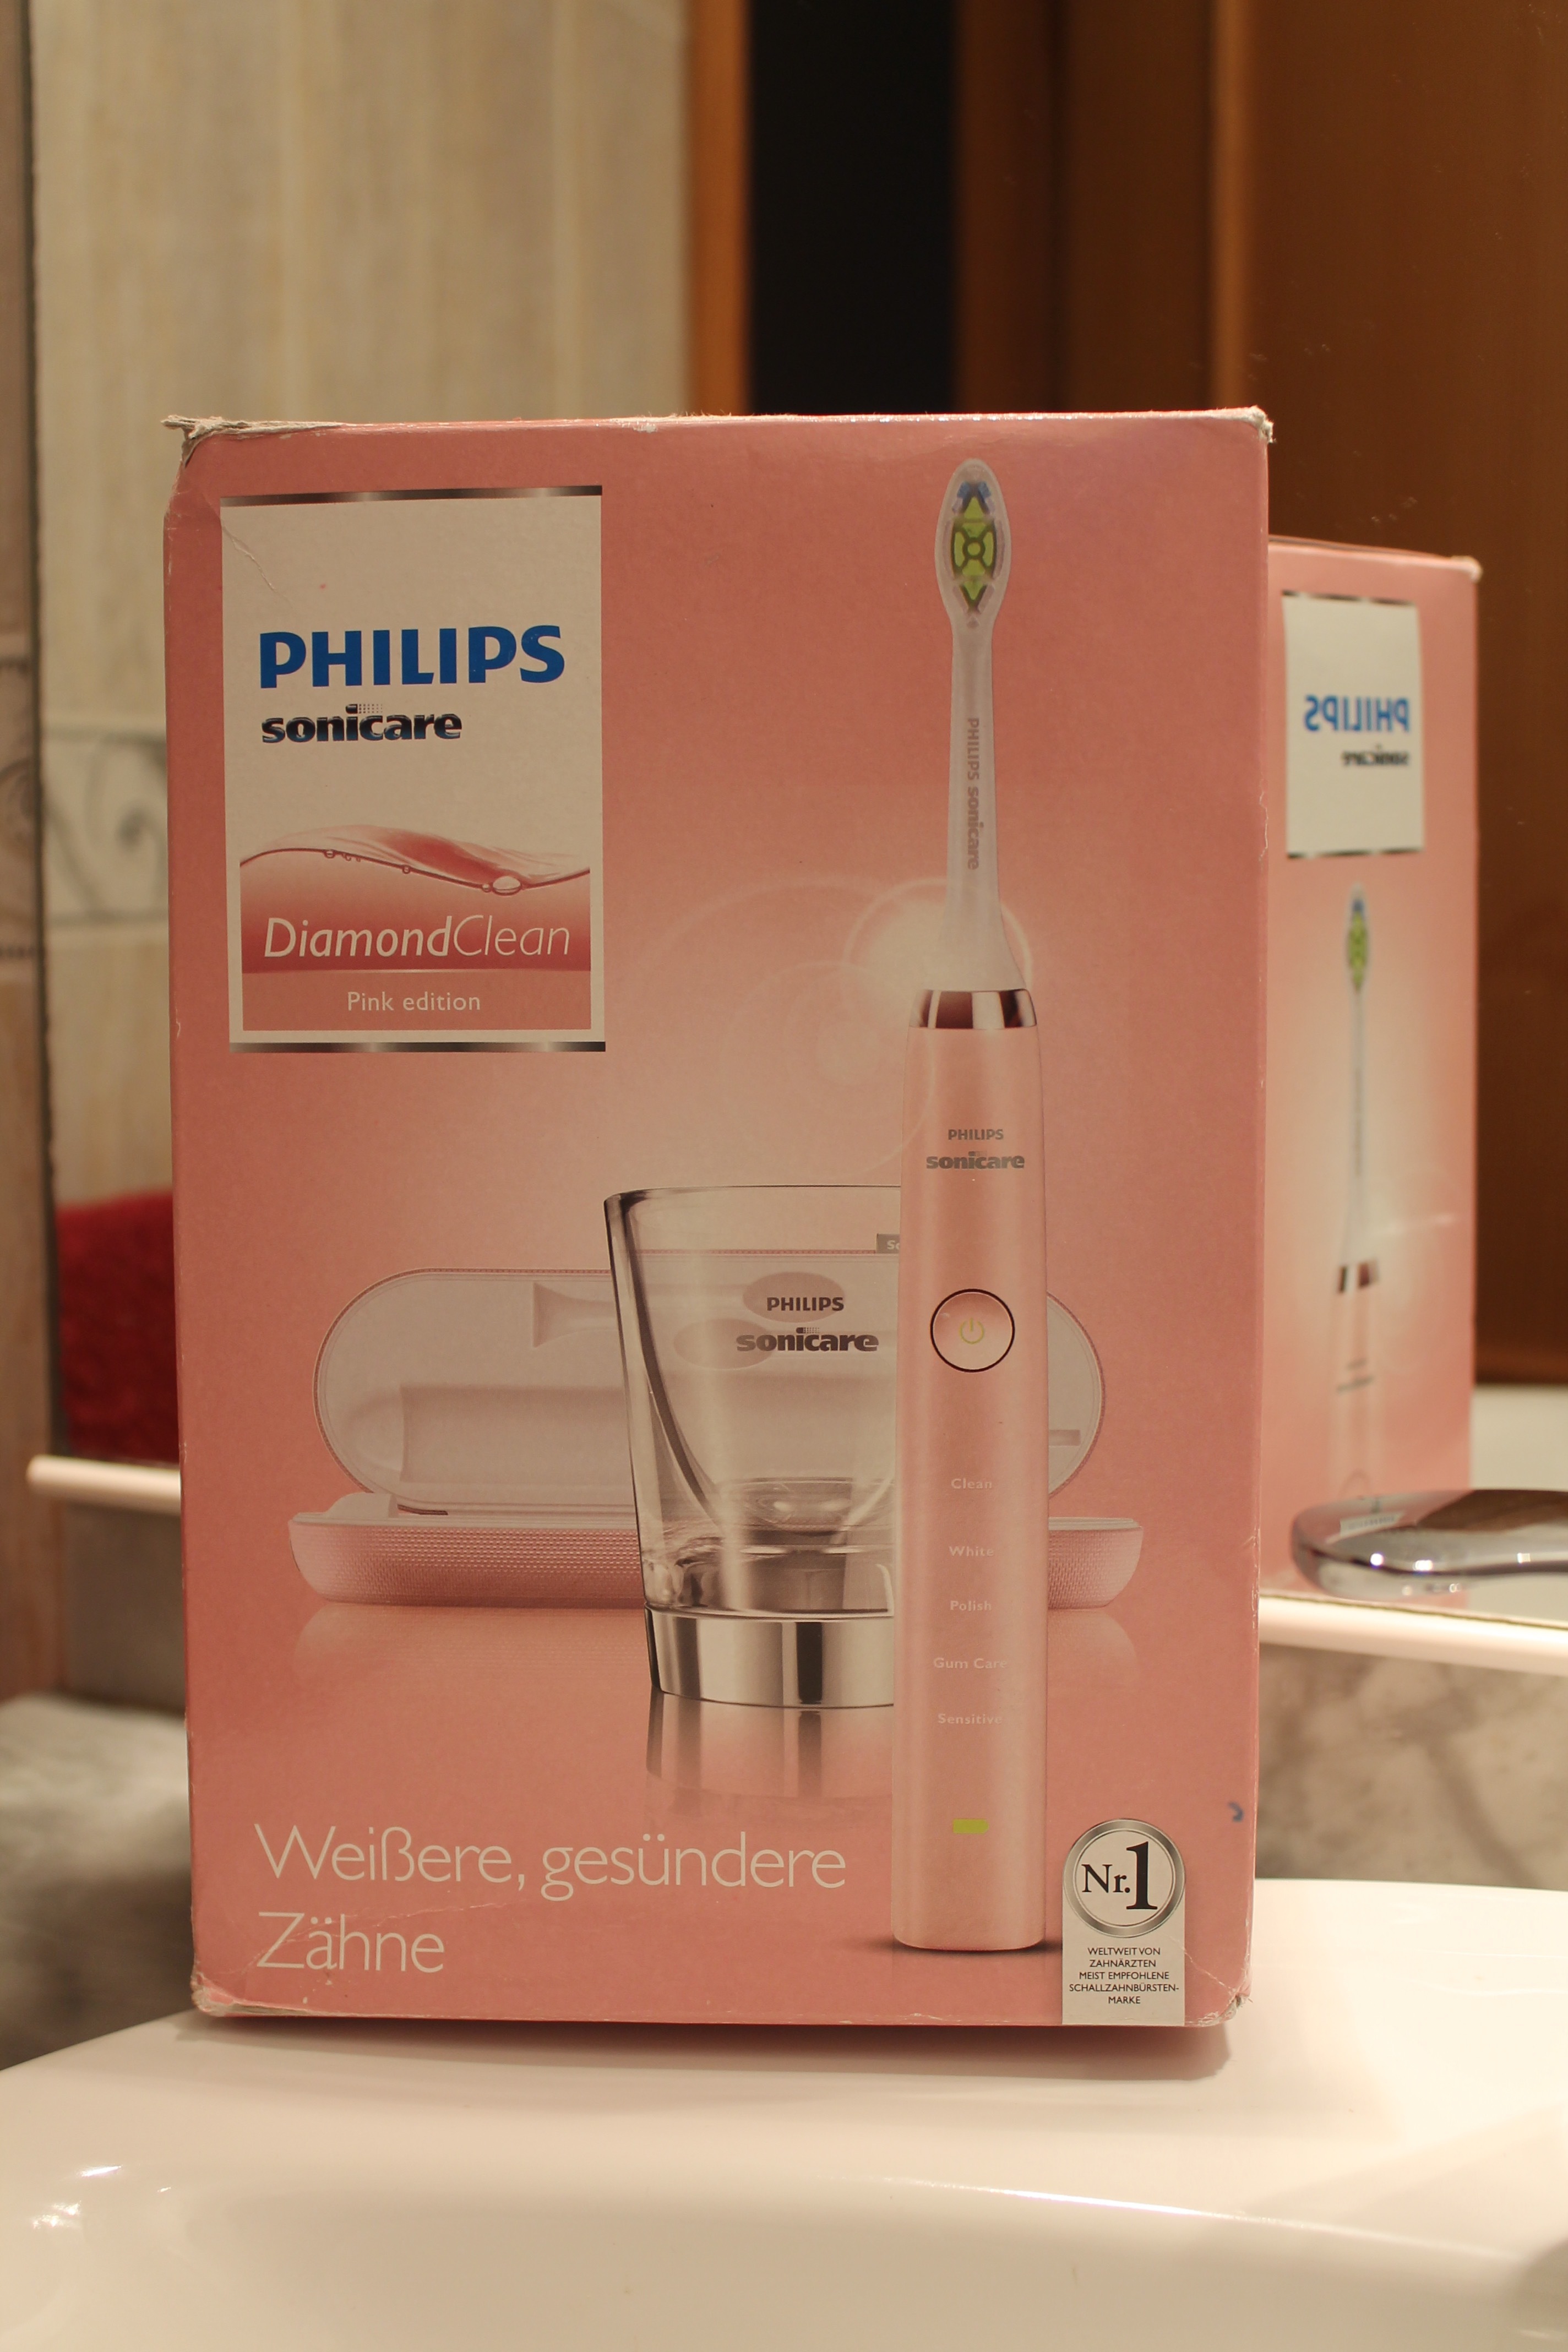 cepillo eléctrico de Philips Diamond Clean